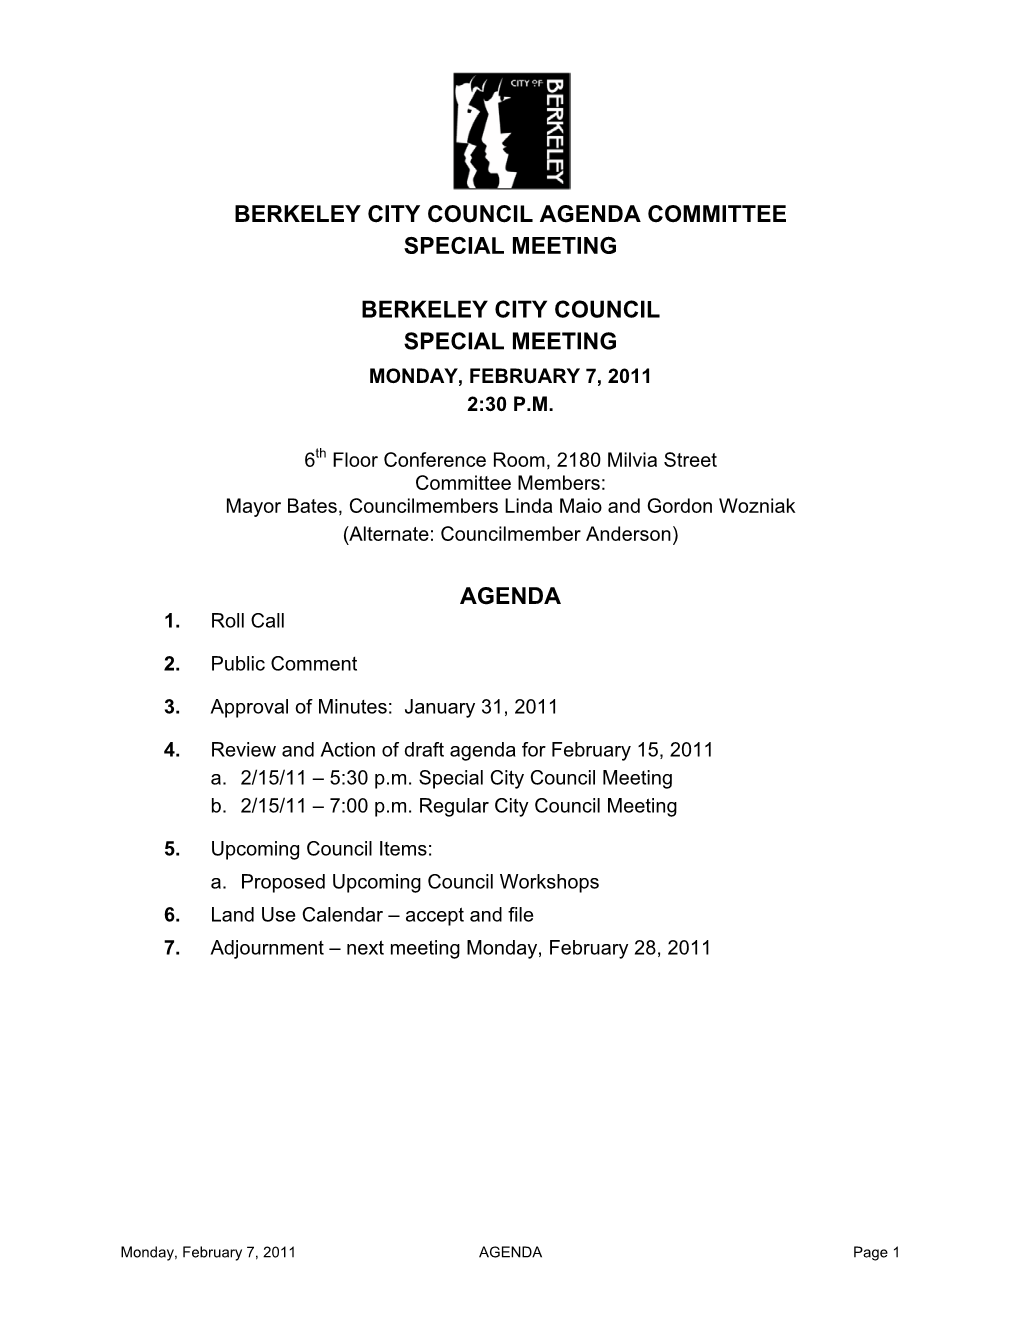 Berkeley City Council Agenda Committee Special Meeting